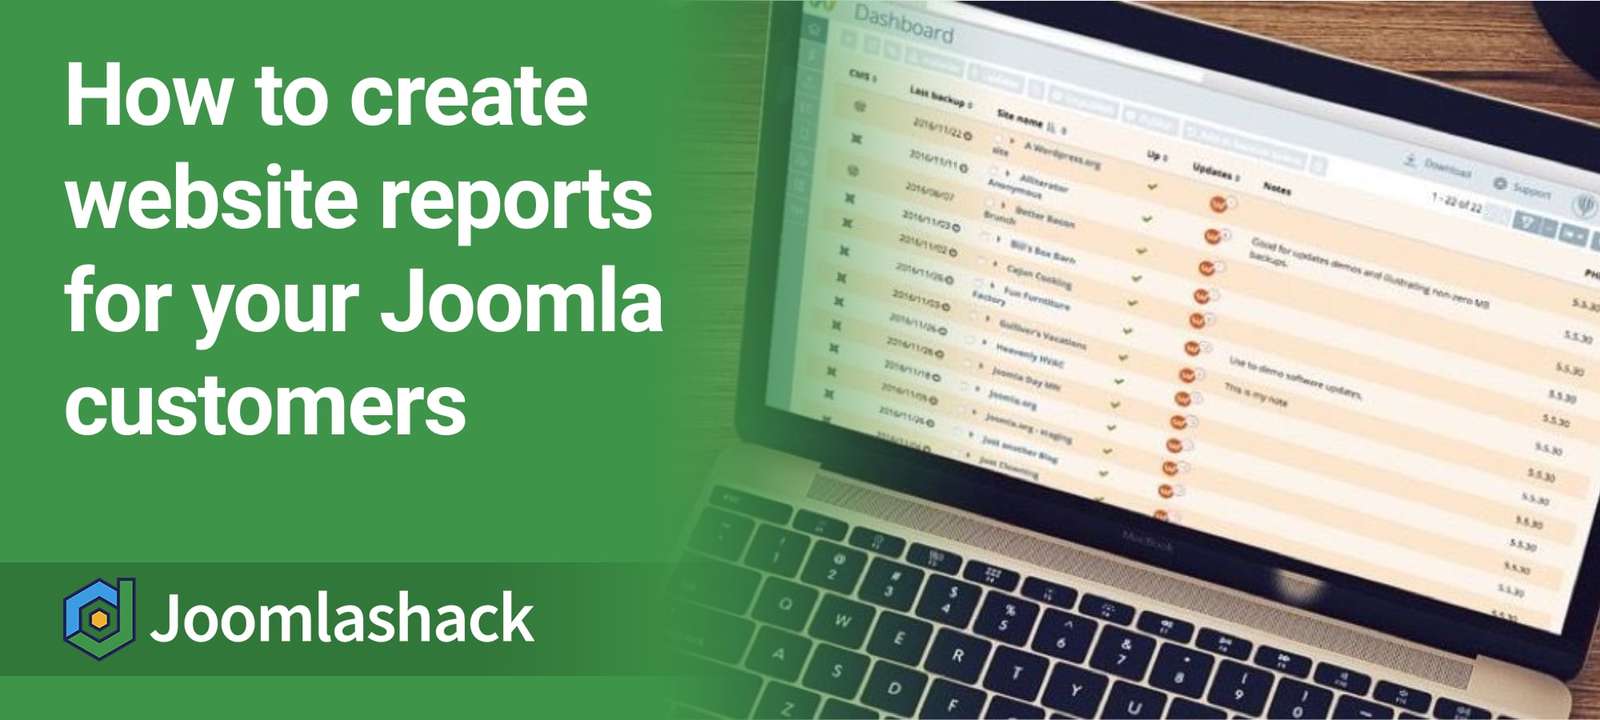 Create Website Reports for Your Joomla Customers